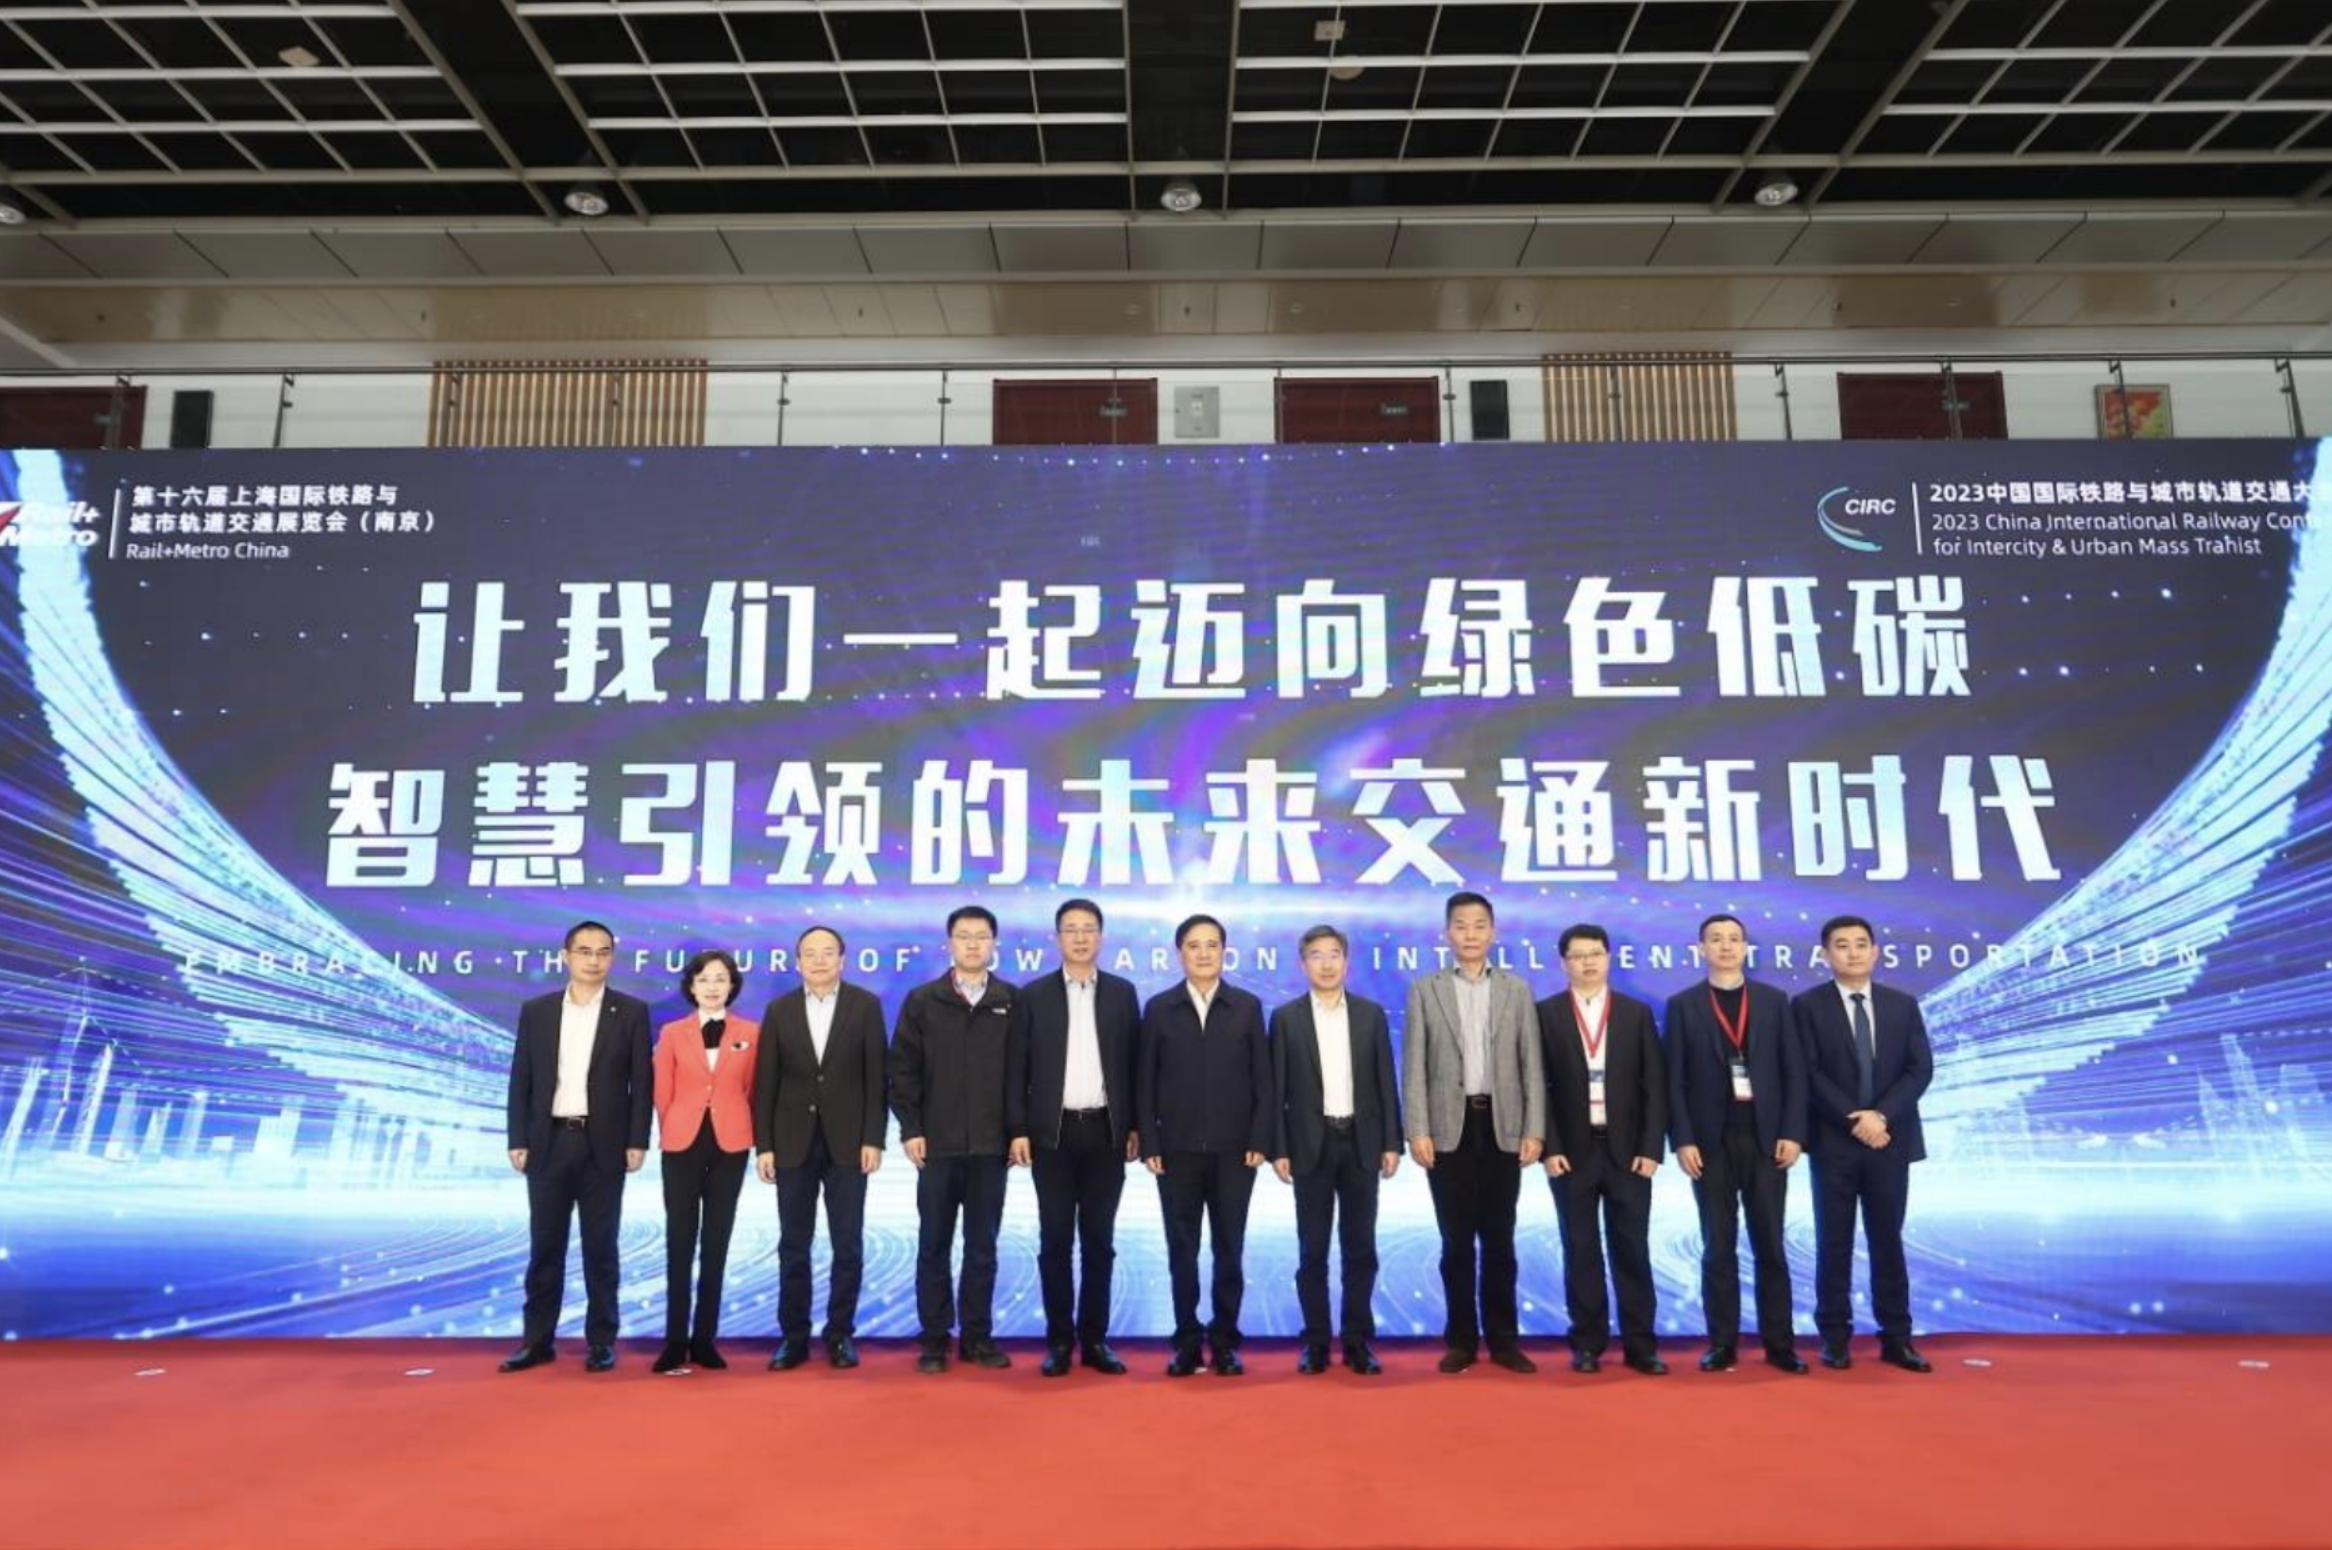 The opening ceremony of Rail+Metro China 2023